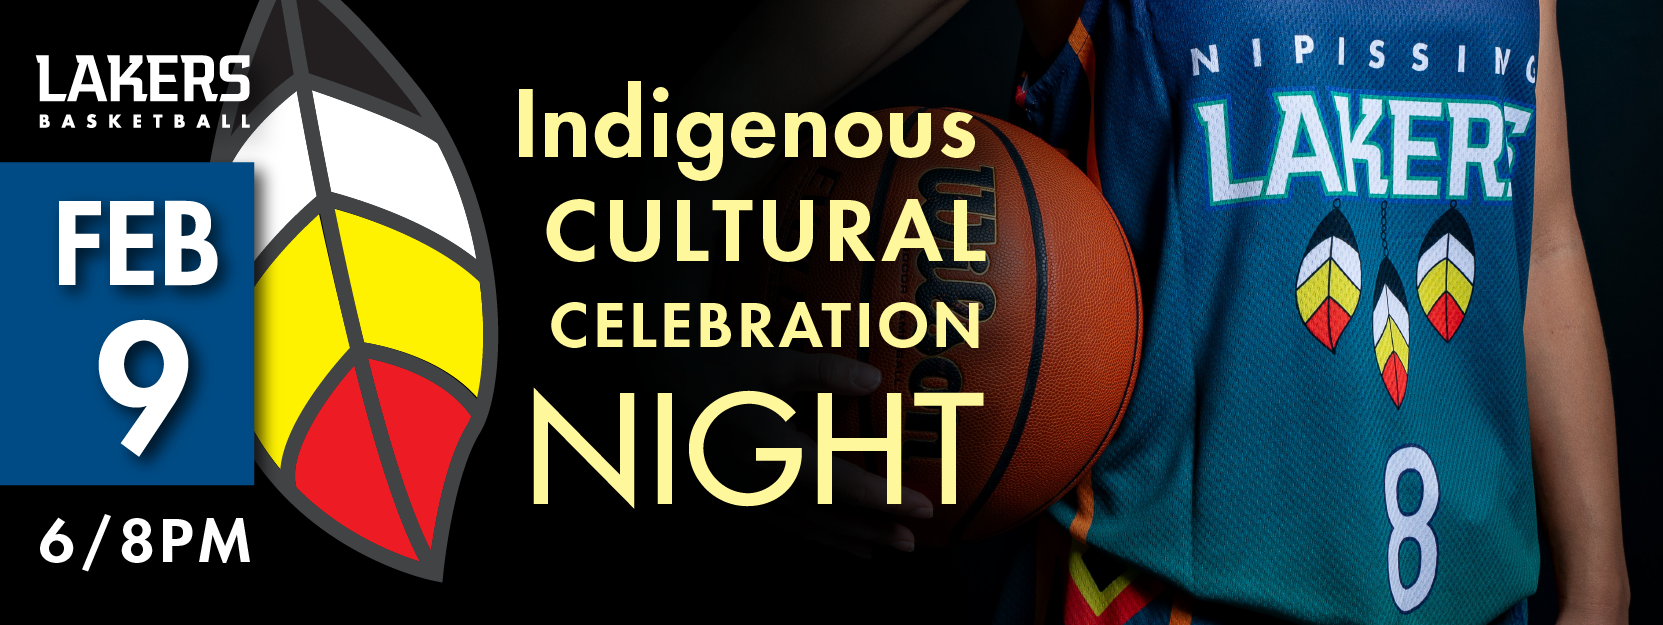 Indigenous Cultural Celebration Night